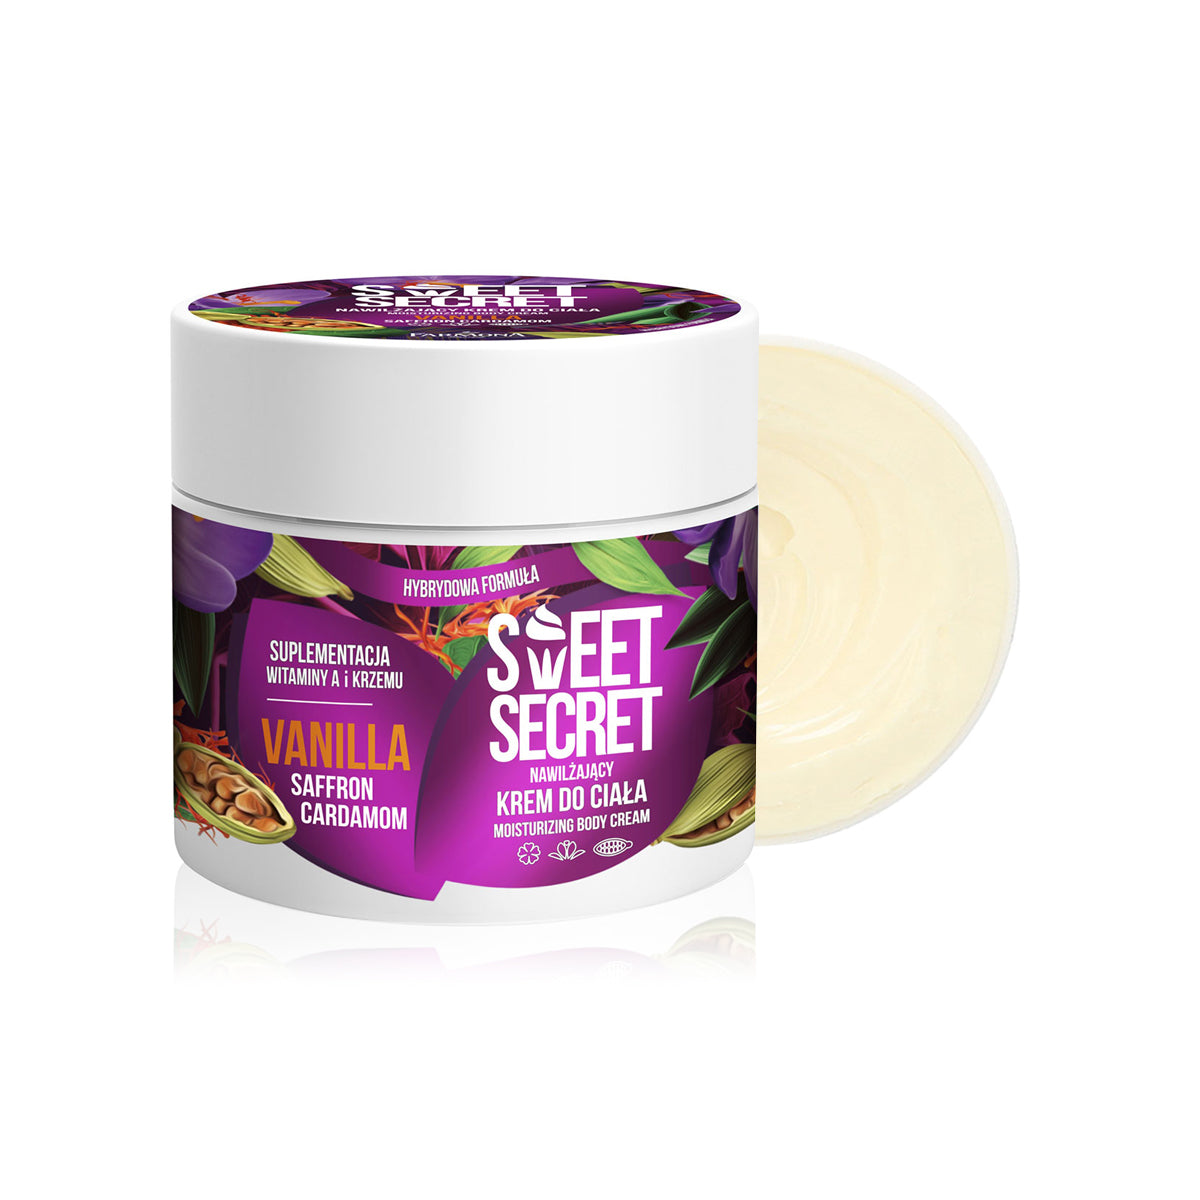 SWEET SECRET vanilla moisturizing body cream 200ml